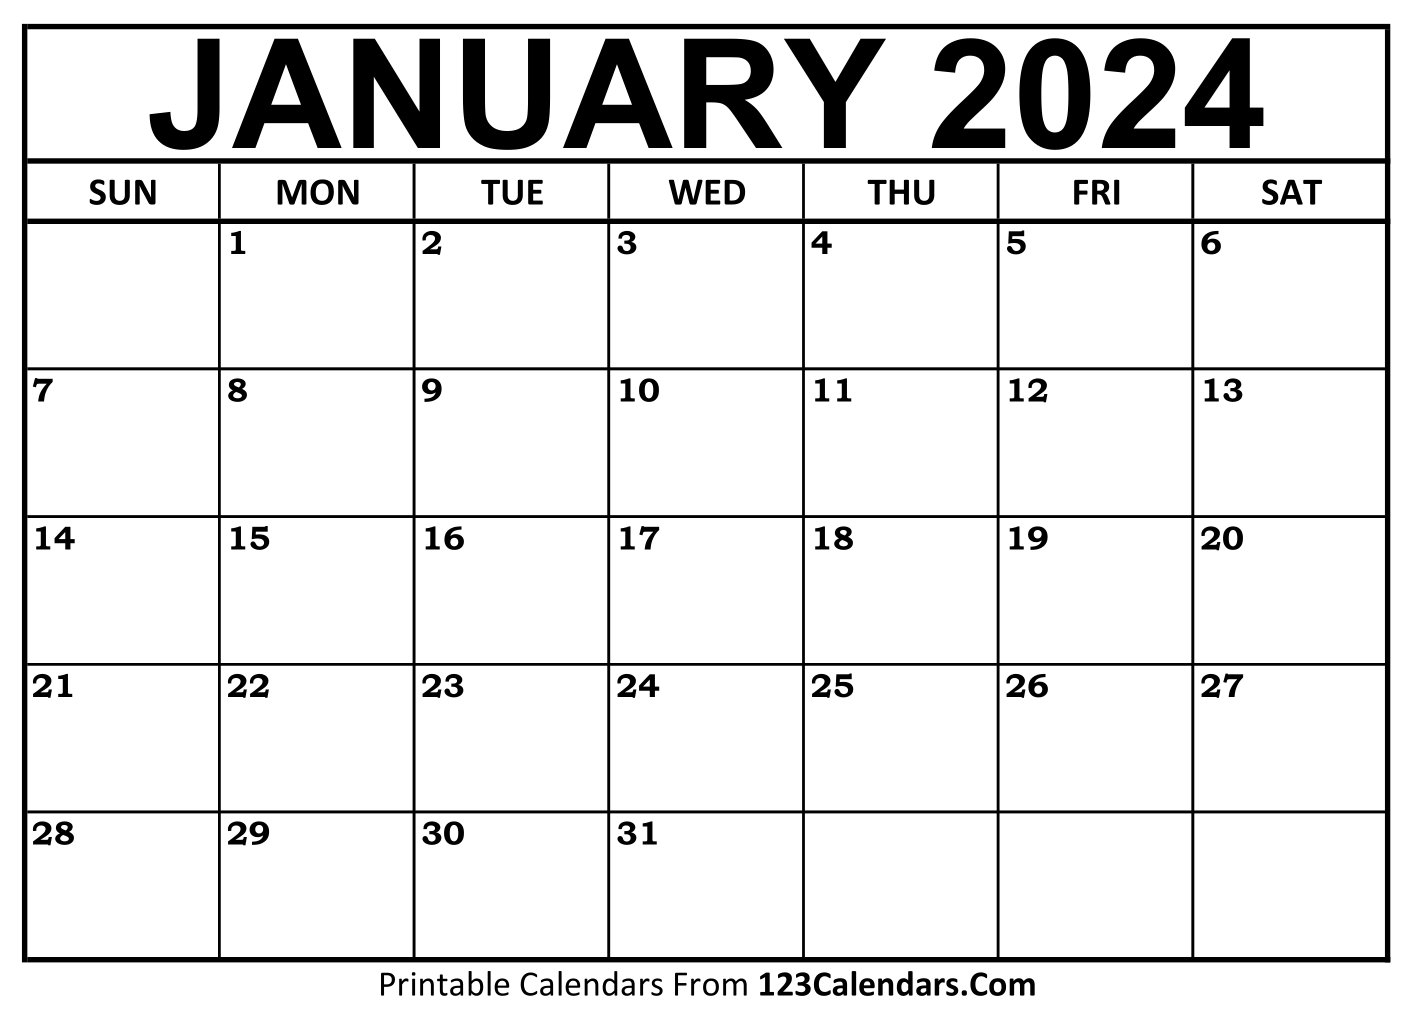 Printable January 2024 Calendar Templates - 123Calendars for Blank January 2024 Calendar Printable Free